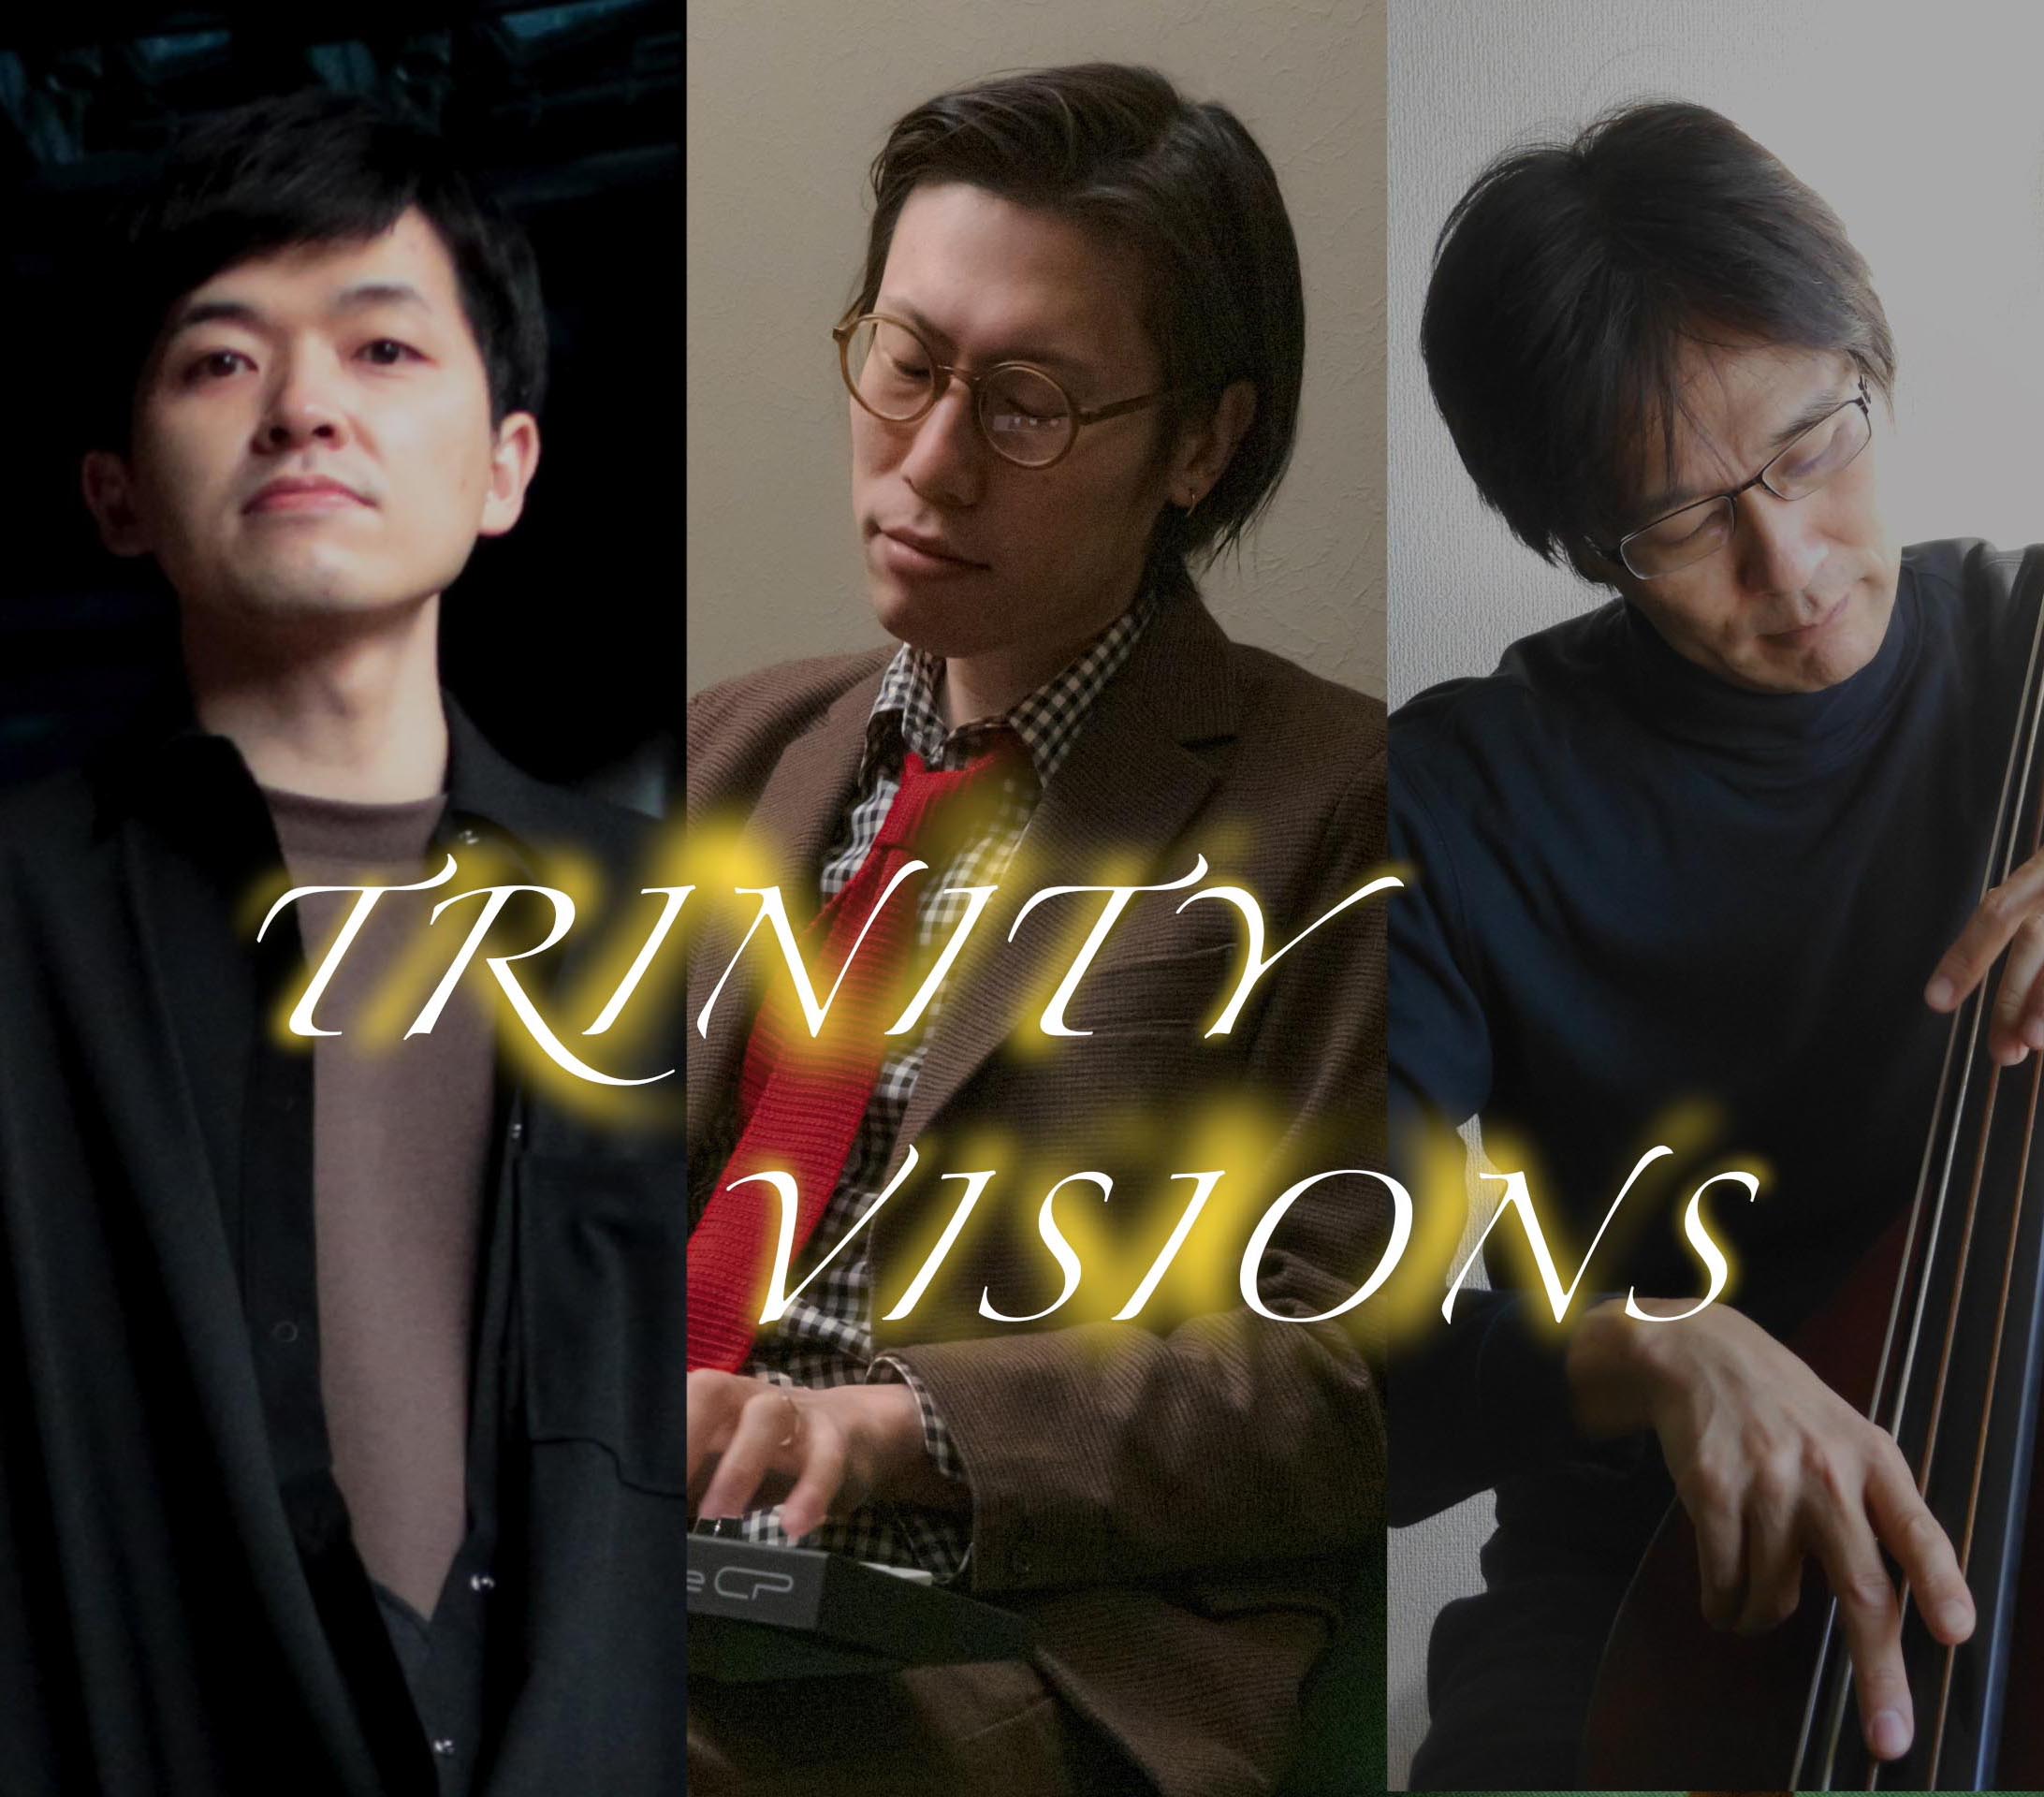  Trinity_Visons_photo01